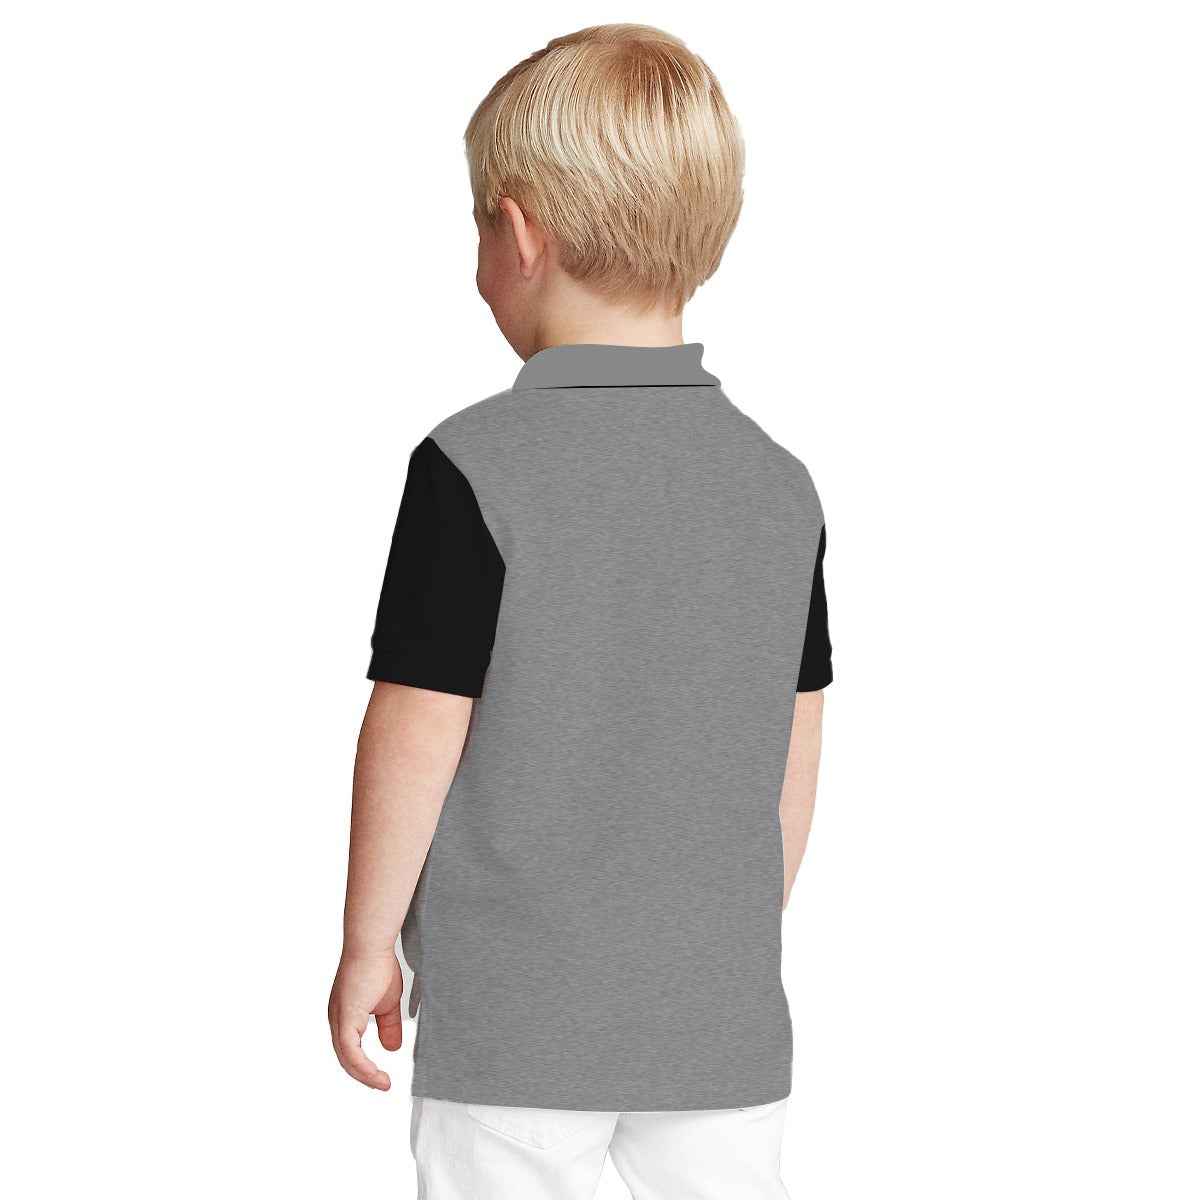 HG Boy's Signature Contrast Sleeves Polo Short - Light Gray